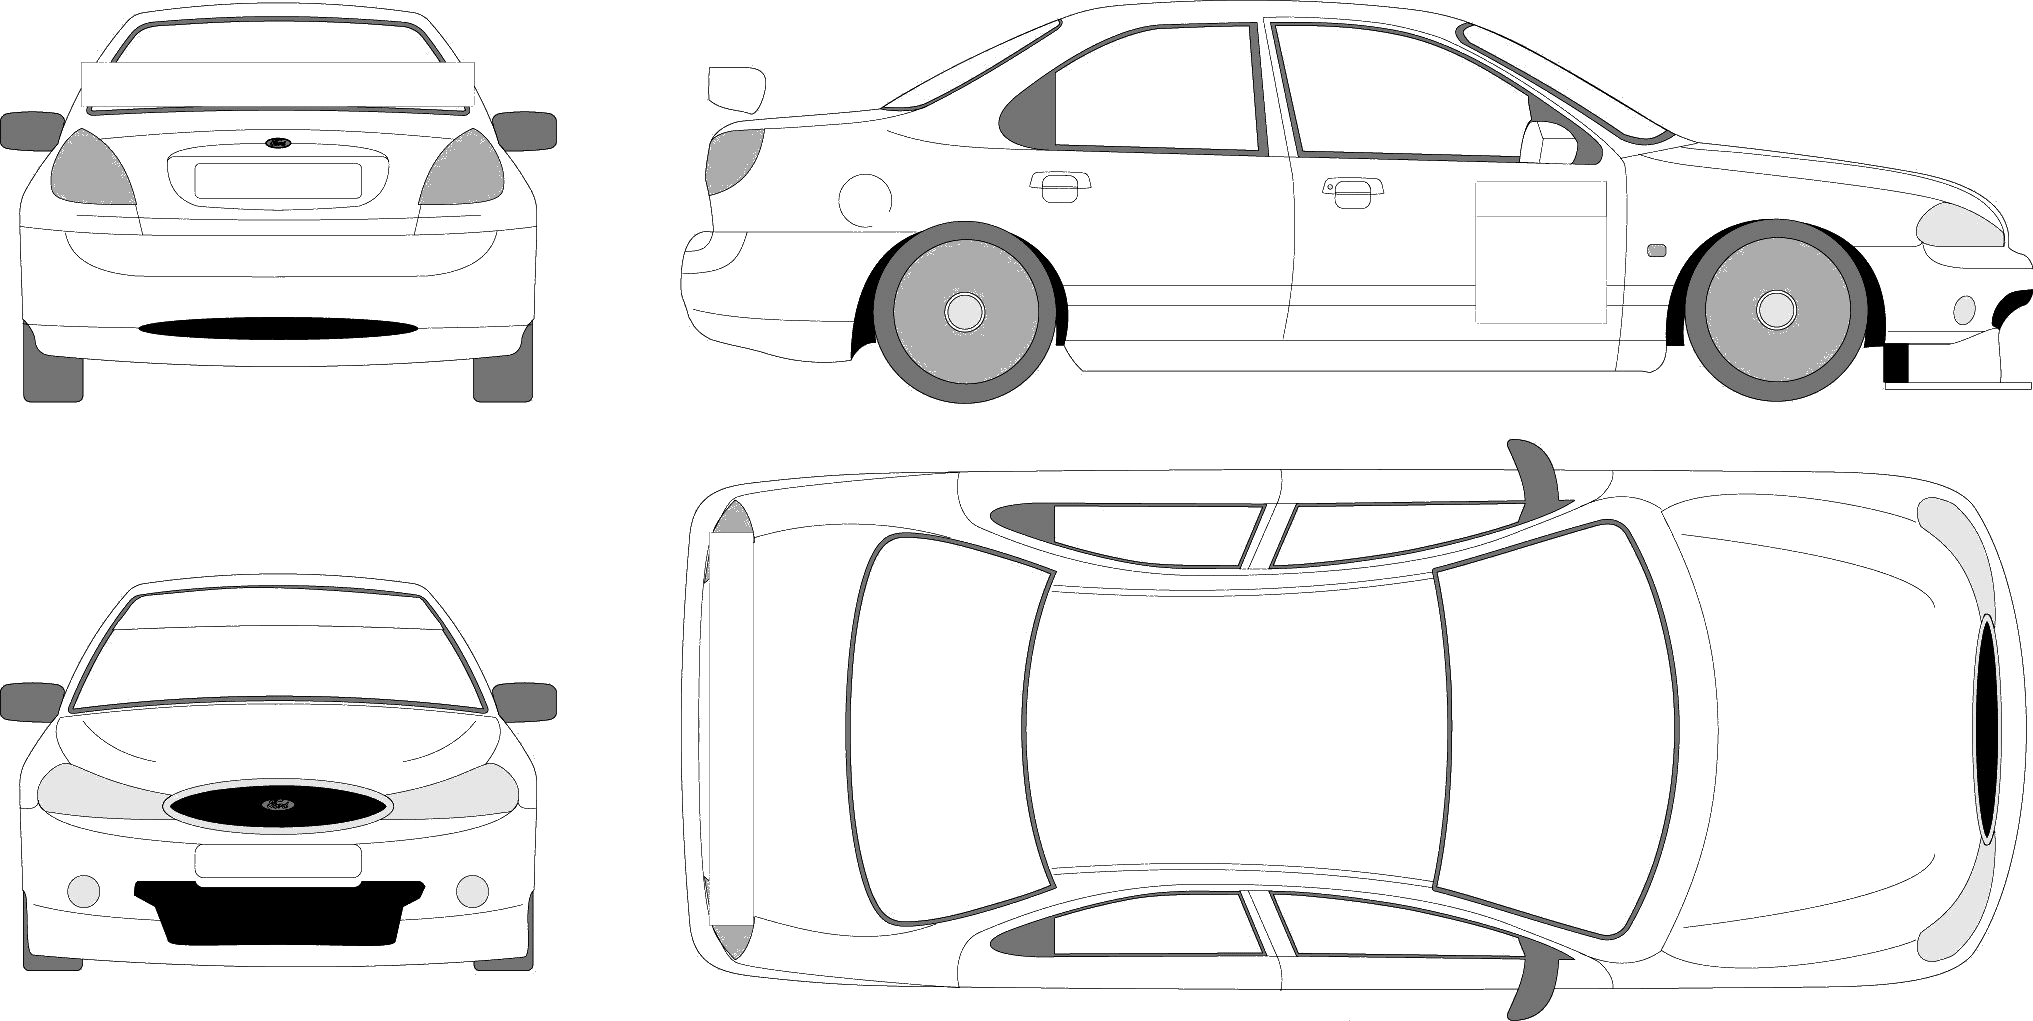 Ford mondeo blueprints #8